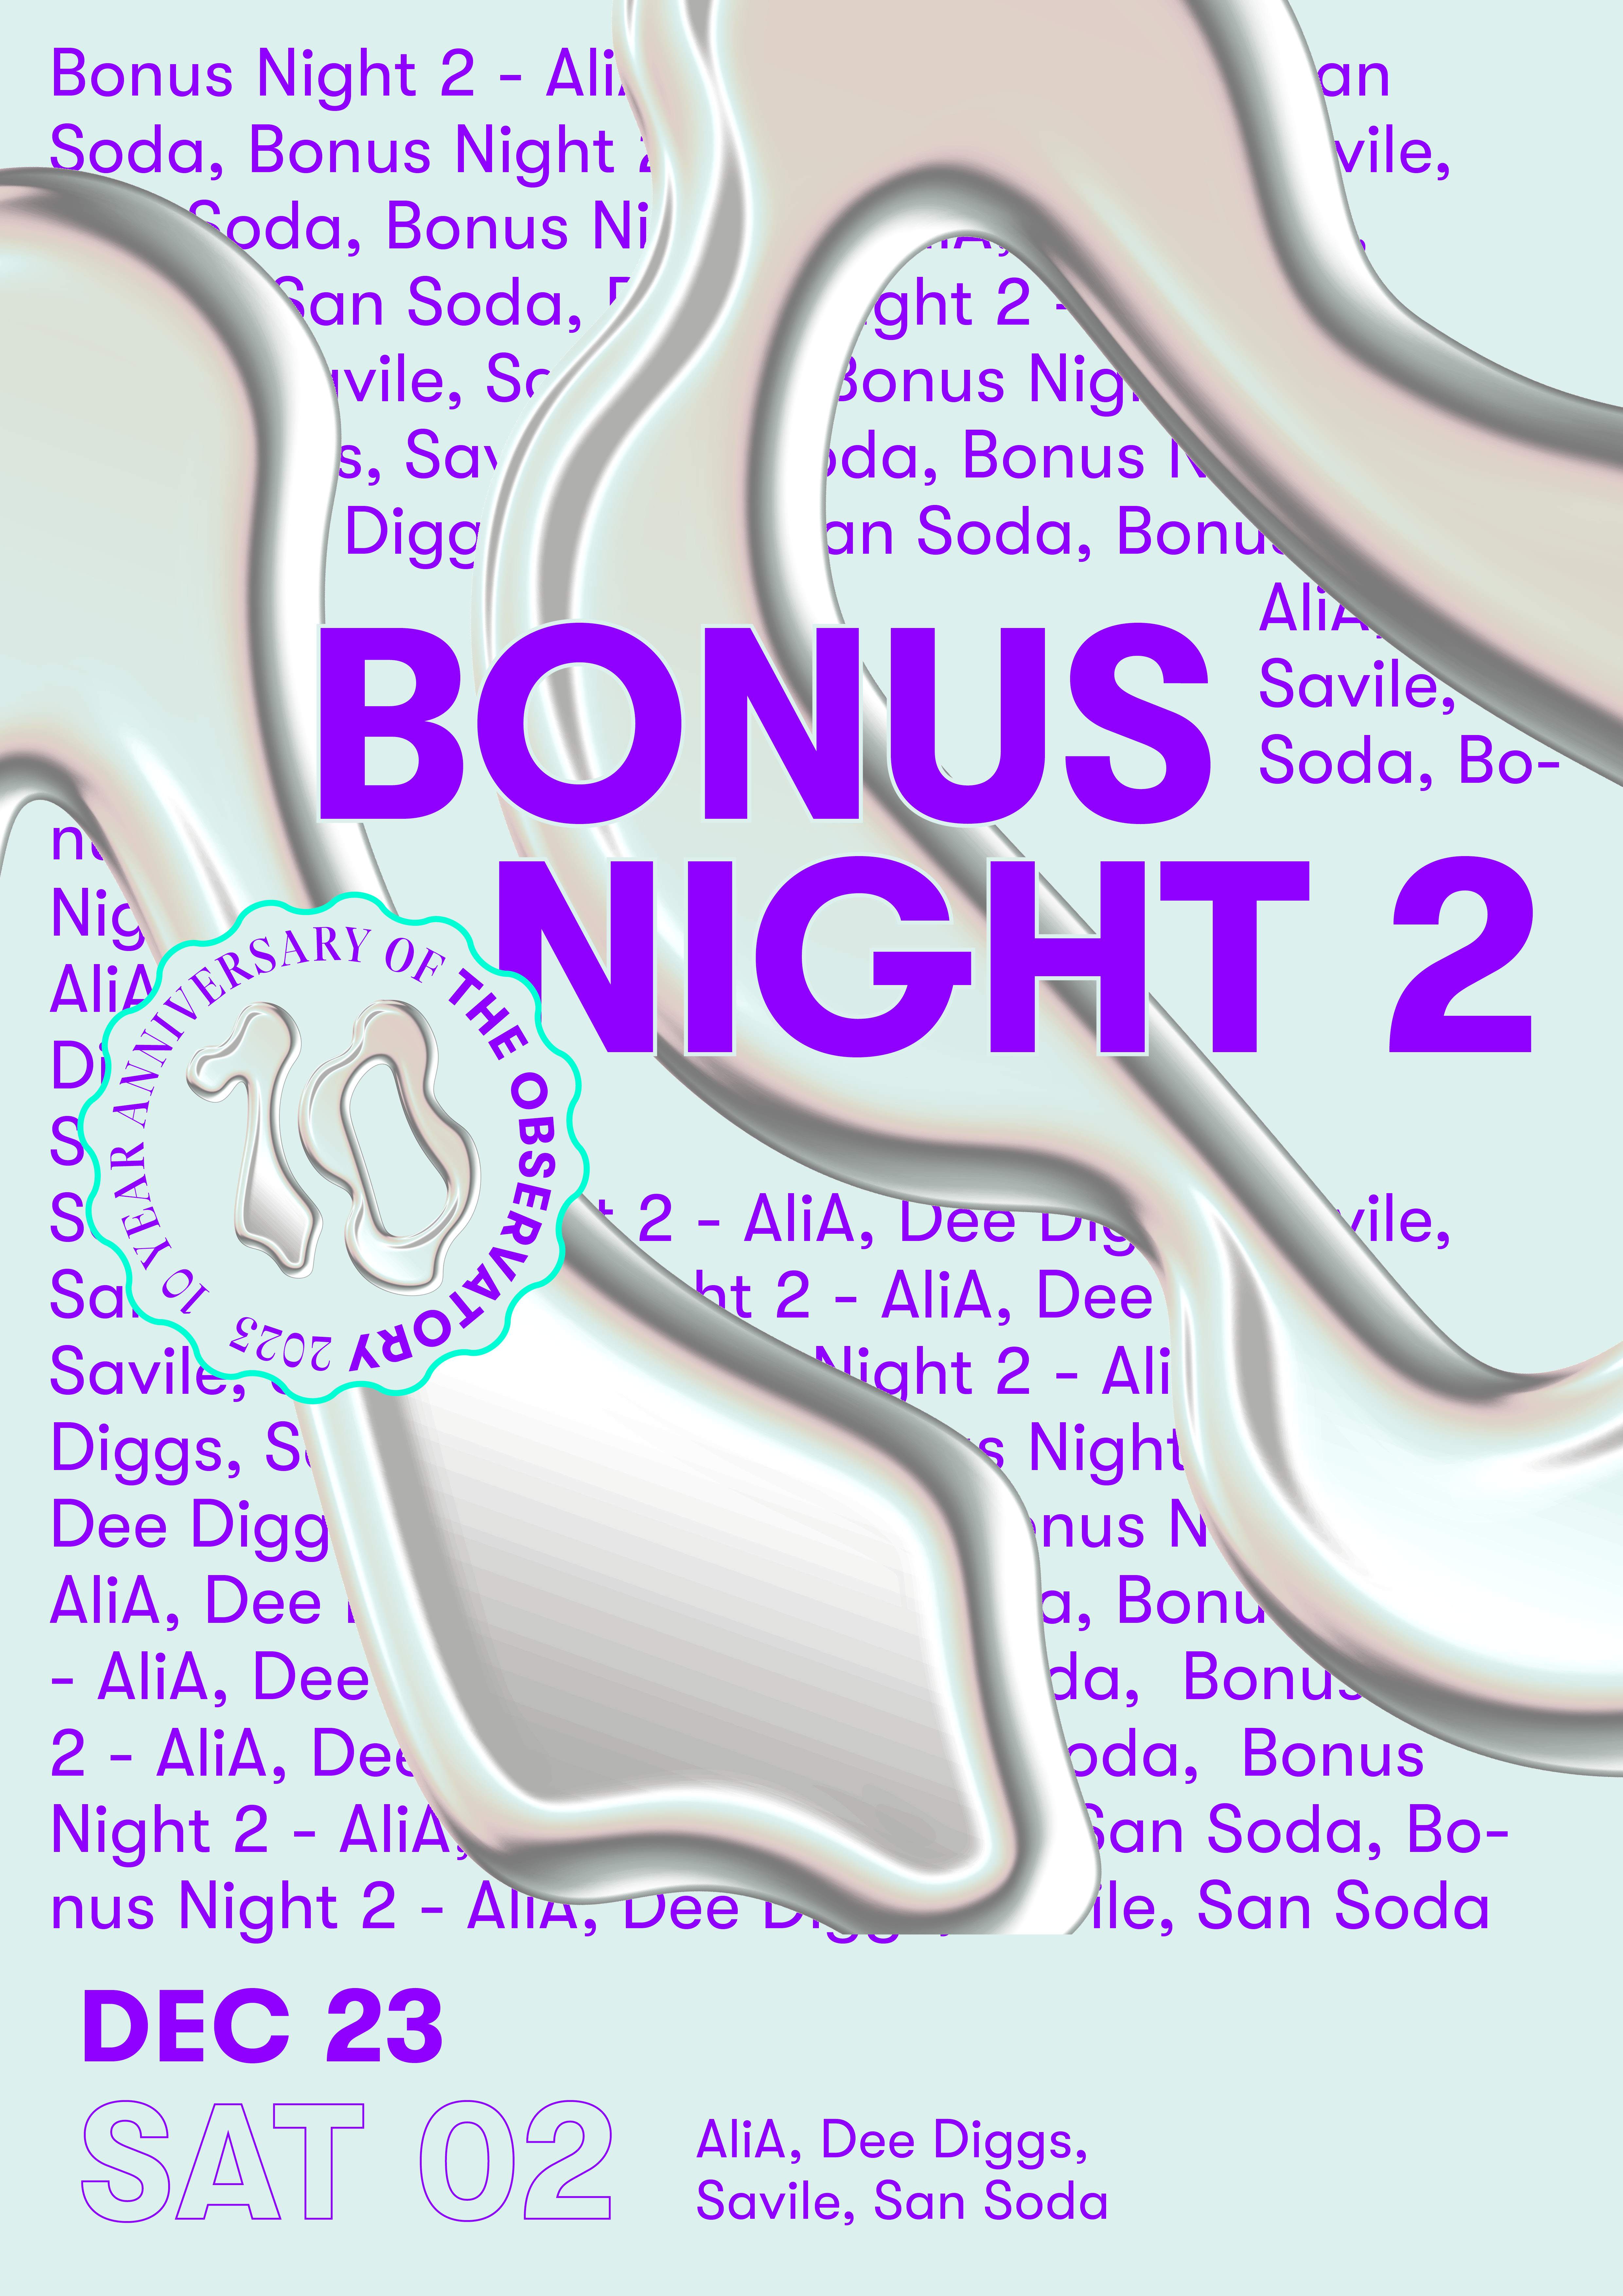 OBS 10th Anniversary: Bonus Night 2 - フライヤー表